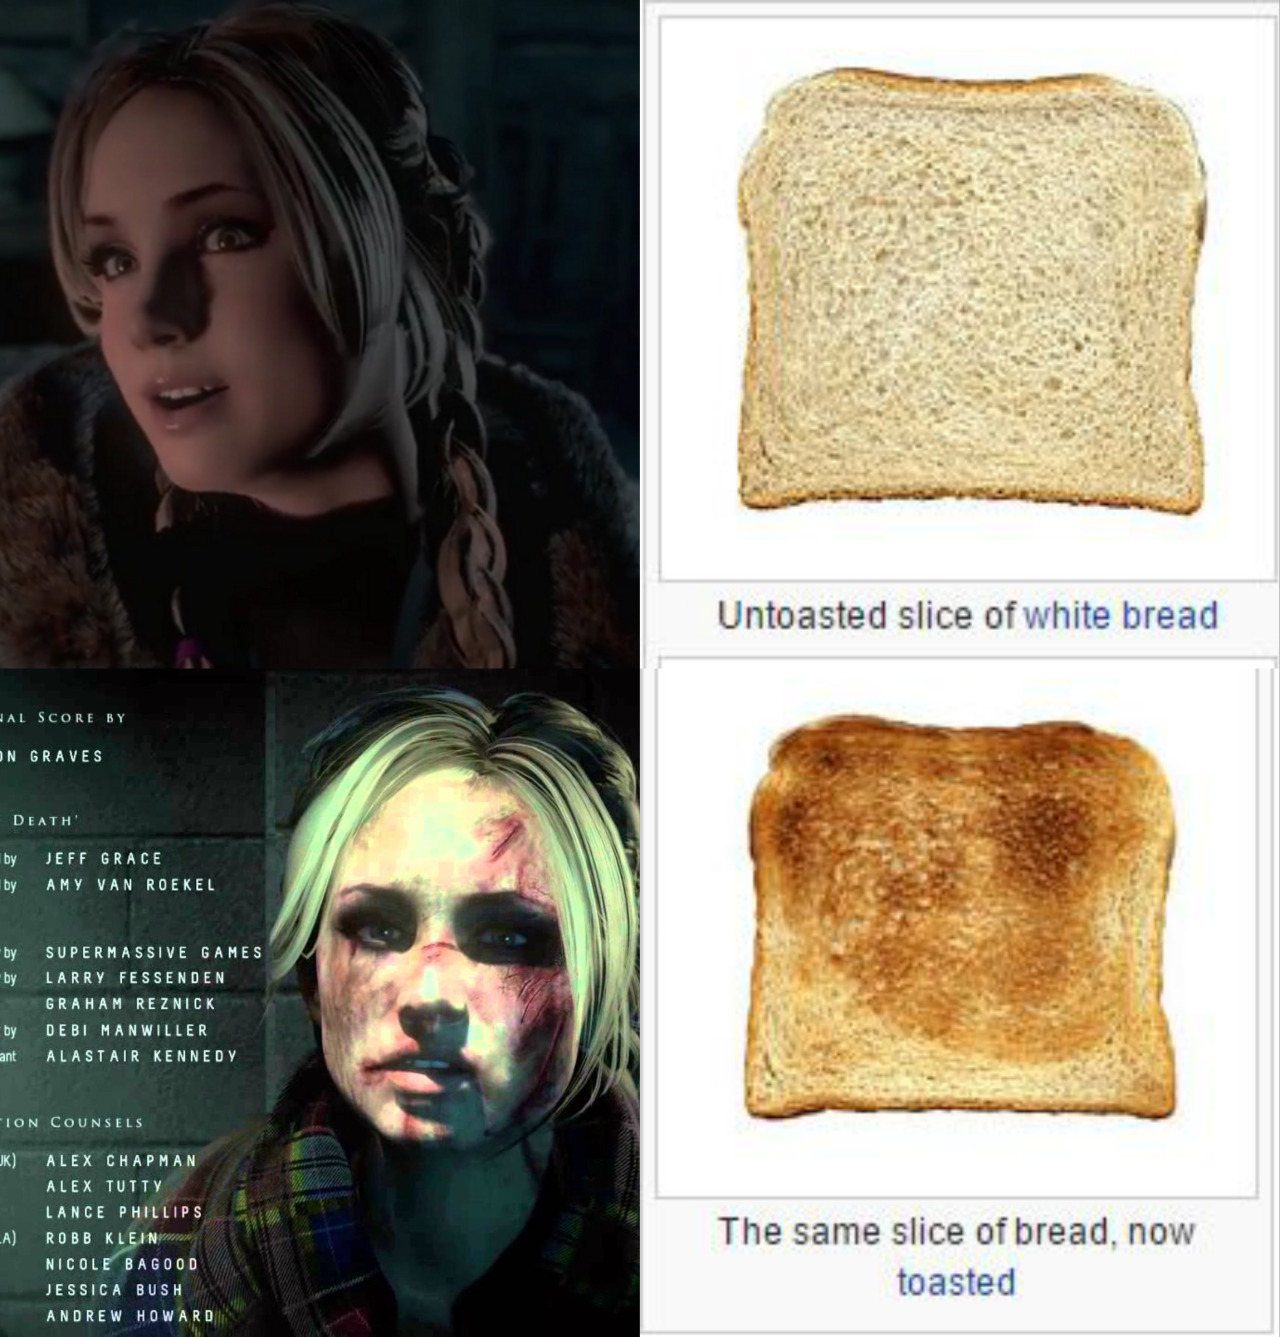 Atleast she isn't burnt toast like her other friends...